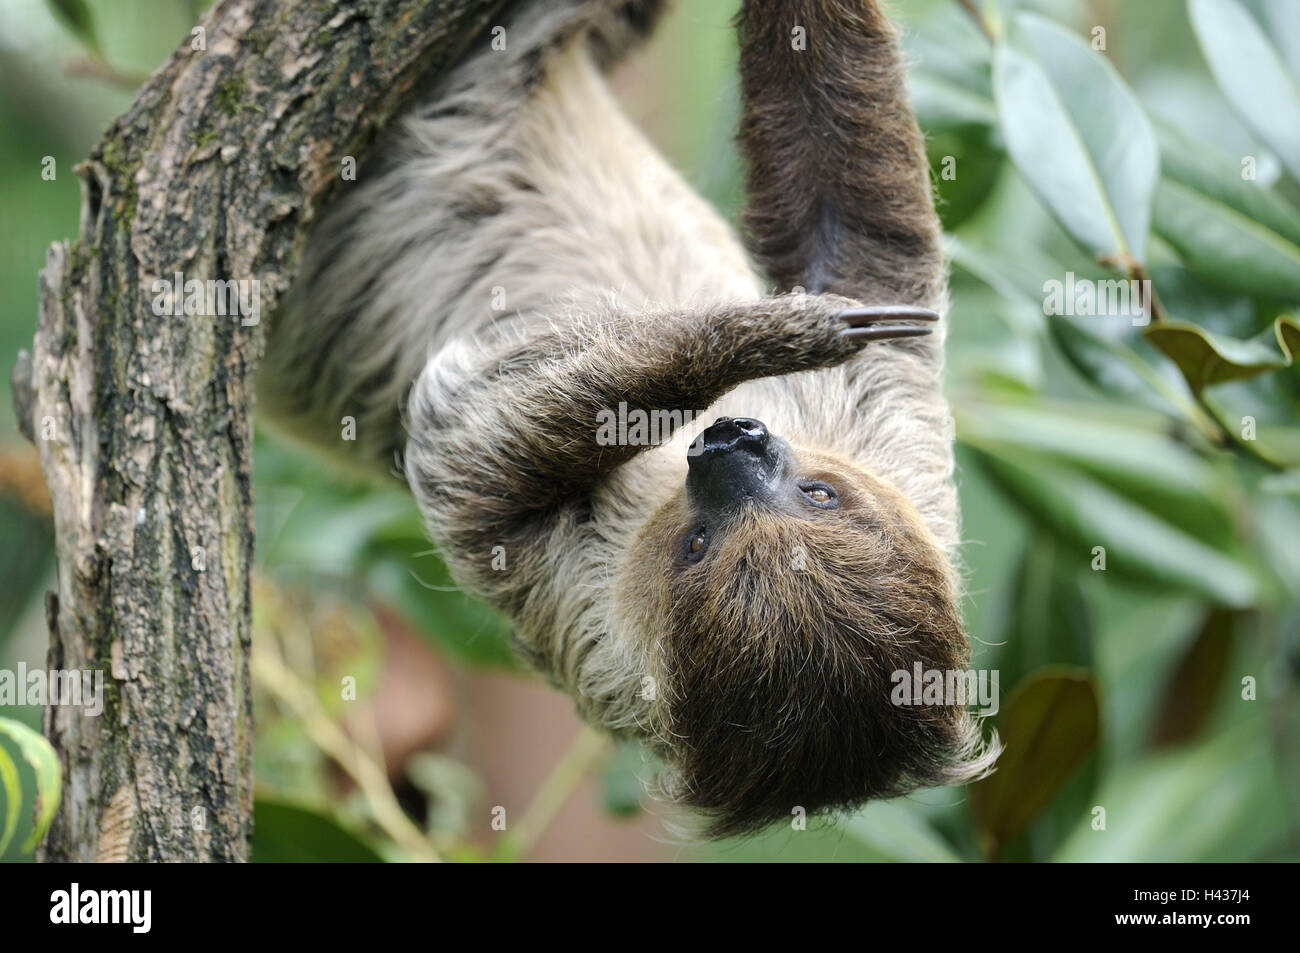 2 finger sloth, Choloepus didactylus, branch, hang, headlong, animal, wild animal, zoo animal, fur, mammal, climb, sloth, Unau, claws, rainforest, exotic, Stock Photo